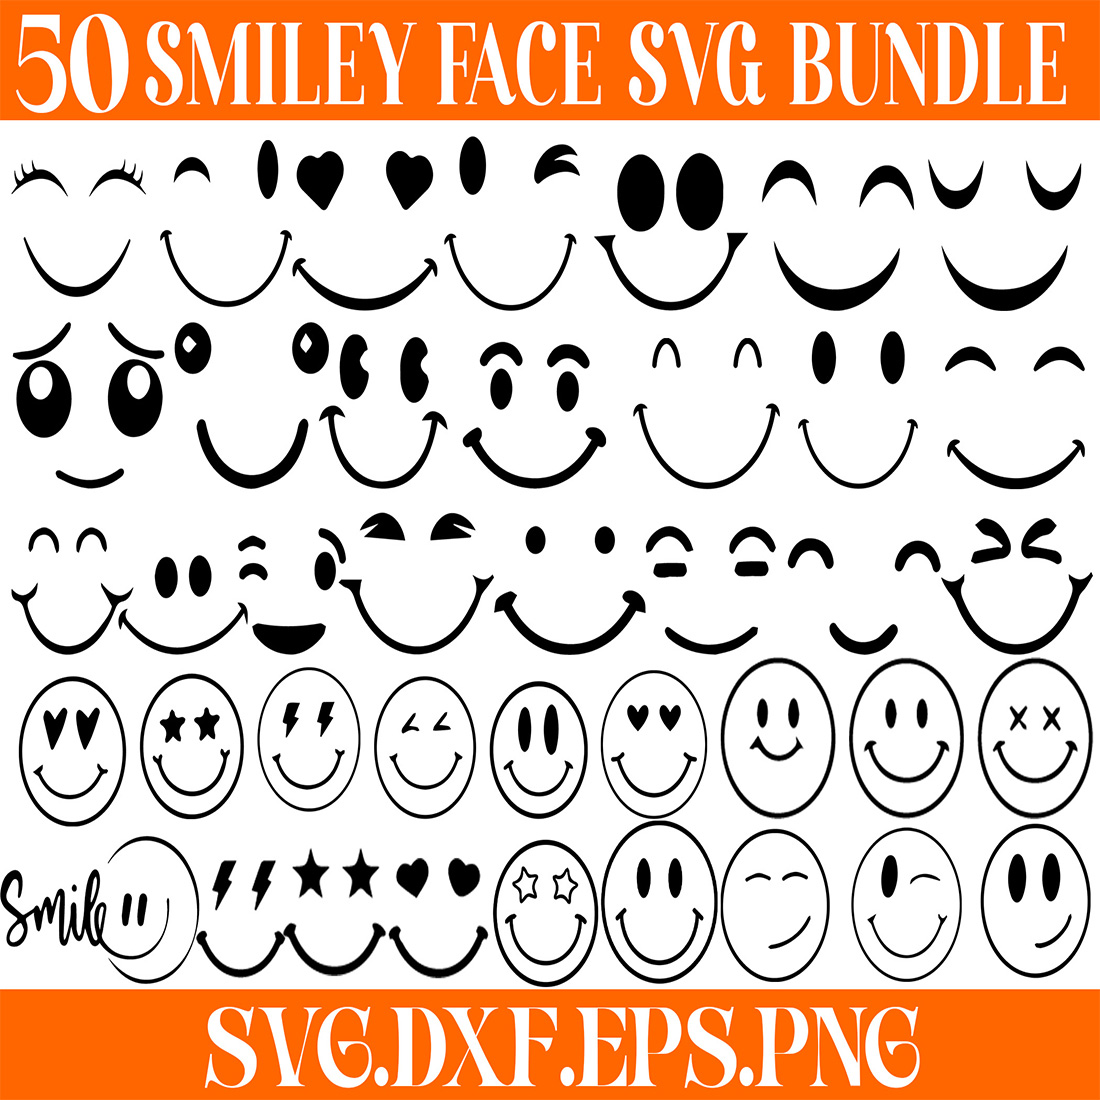 Free Flower Smiley clipart - Download in Illustrator, EPS, SVG, JPG, PNG